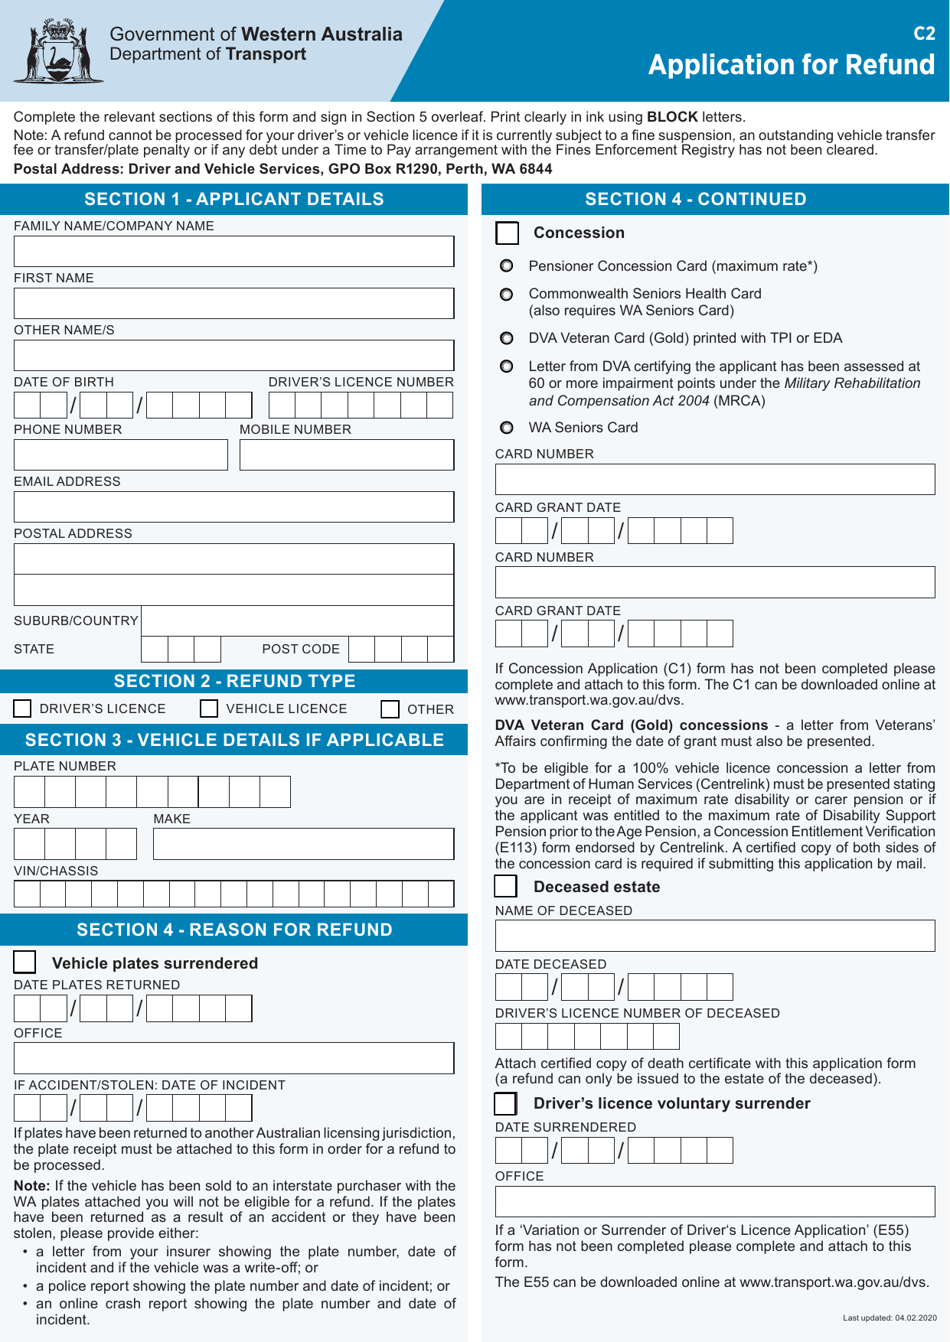 Form C2 Application for Refund - Western Australia, Australia, Page 1